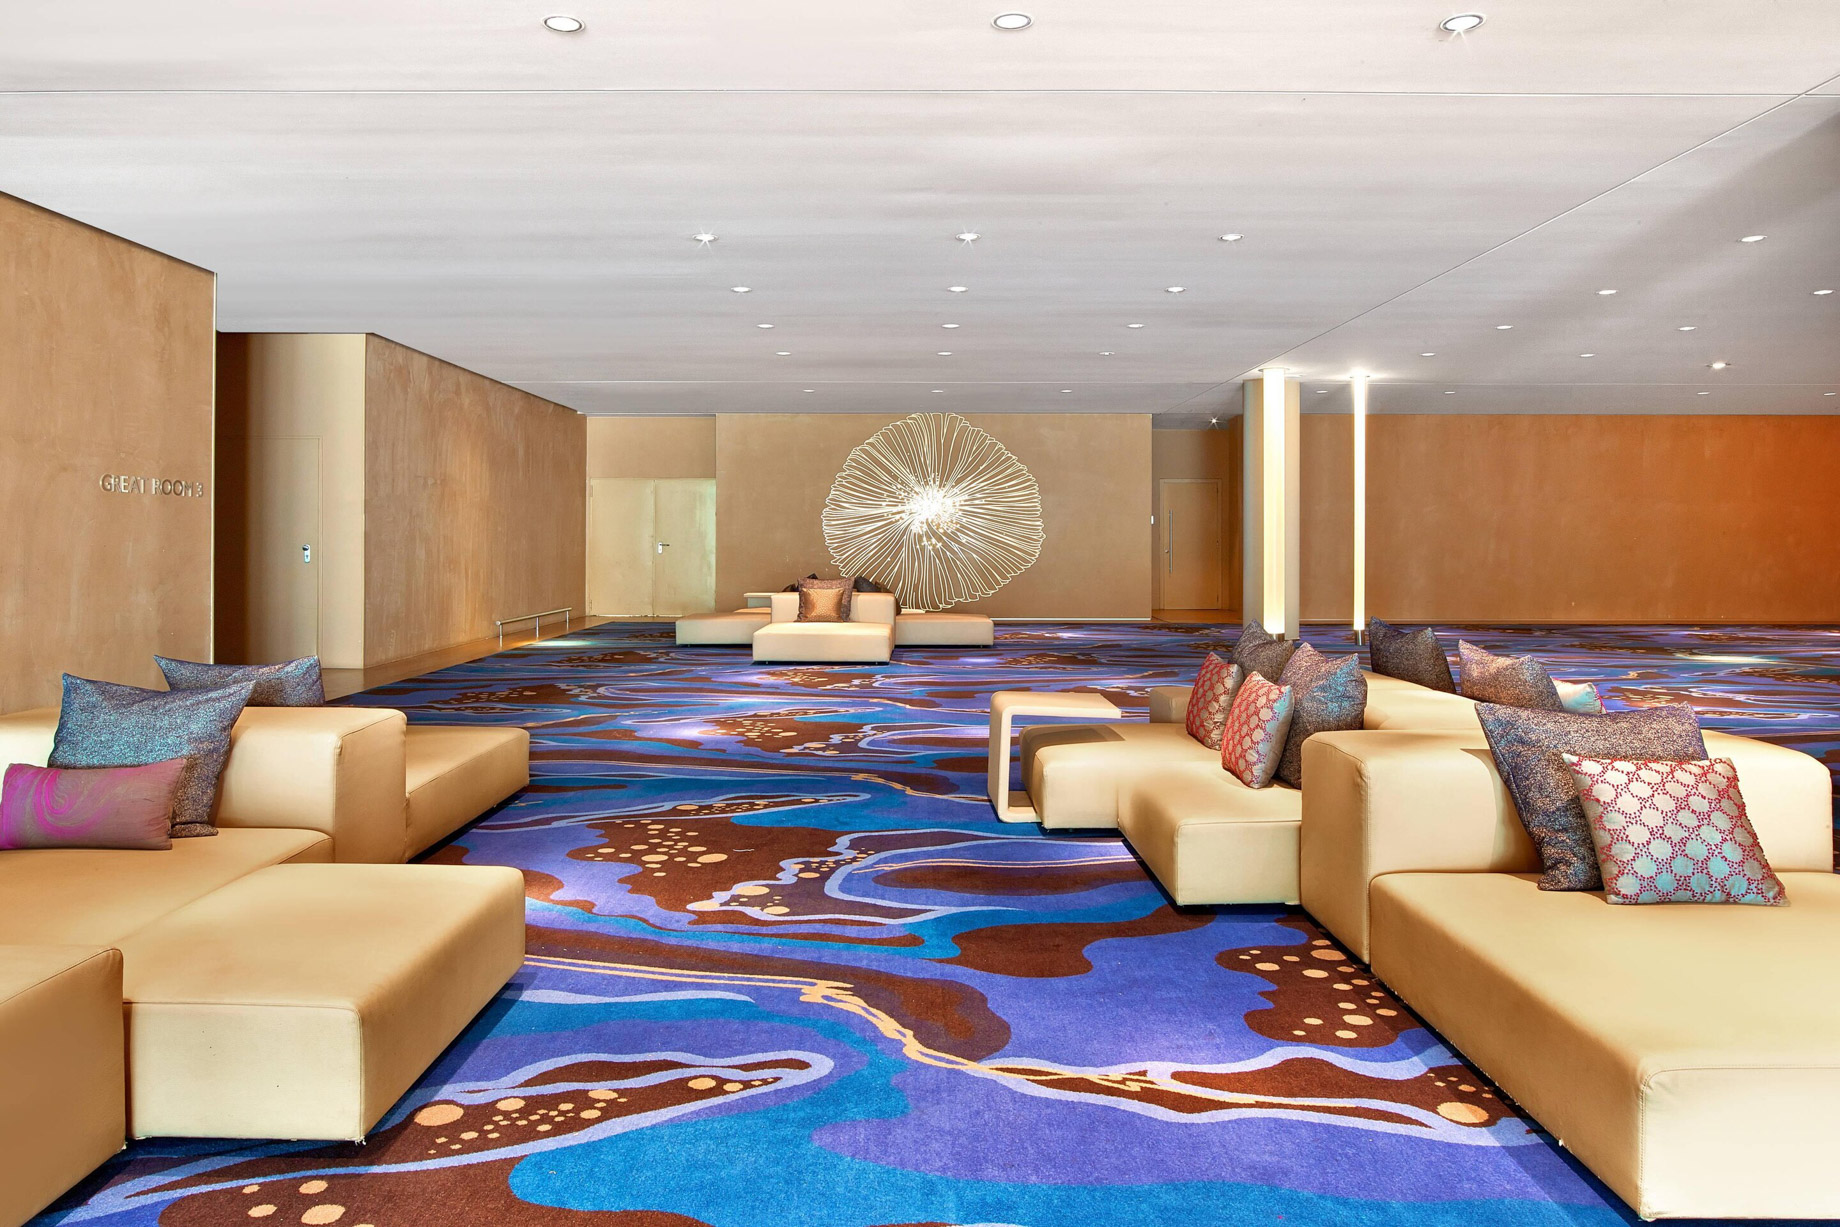 W Barcelona Hotel – Barcelona, Spain – Great Room Foyer Sofa Set Up